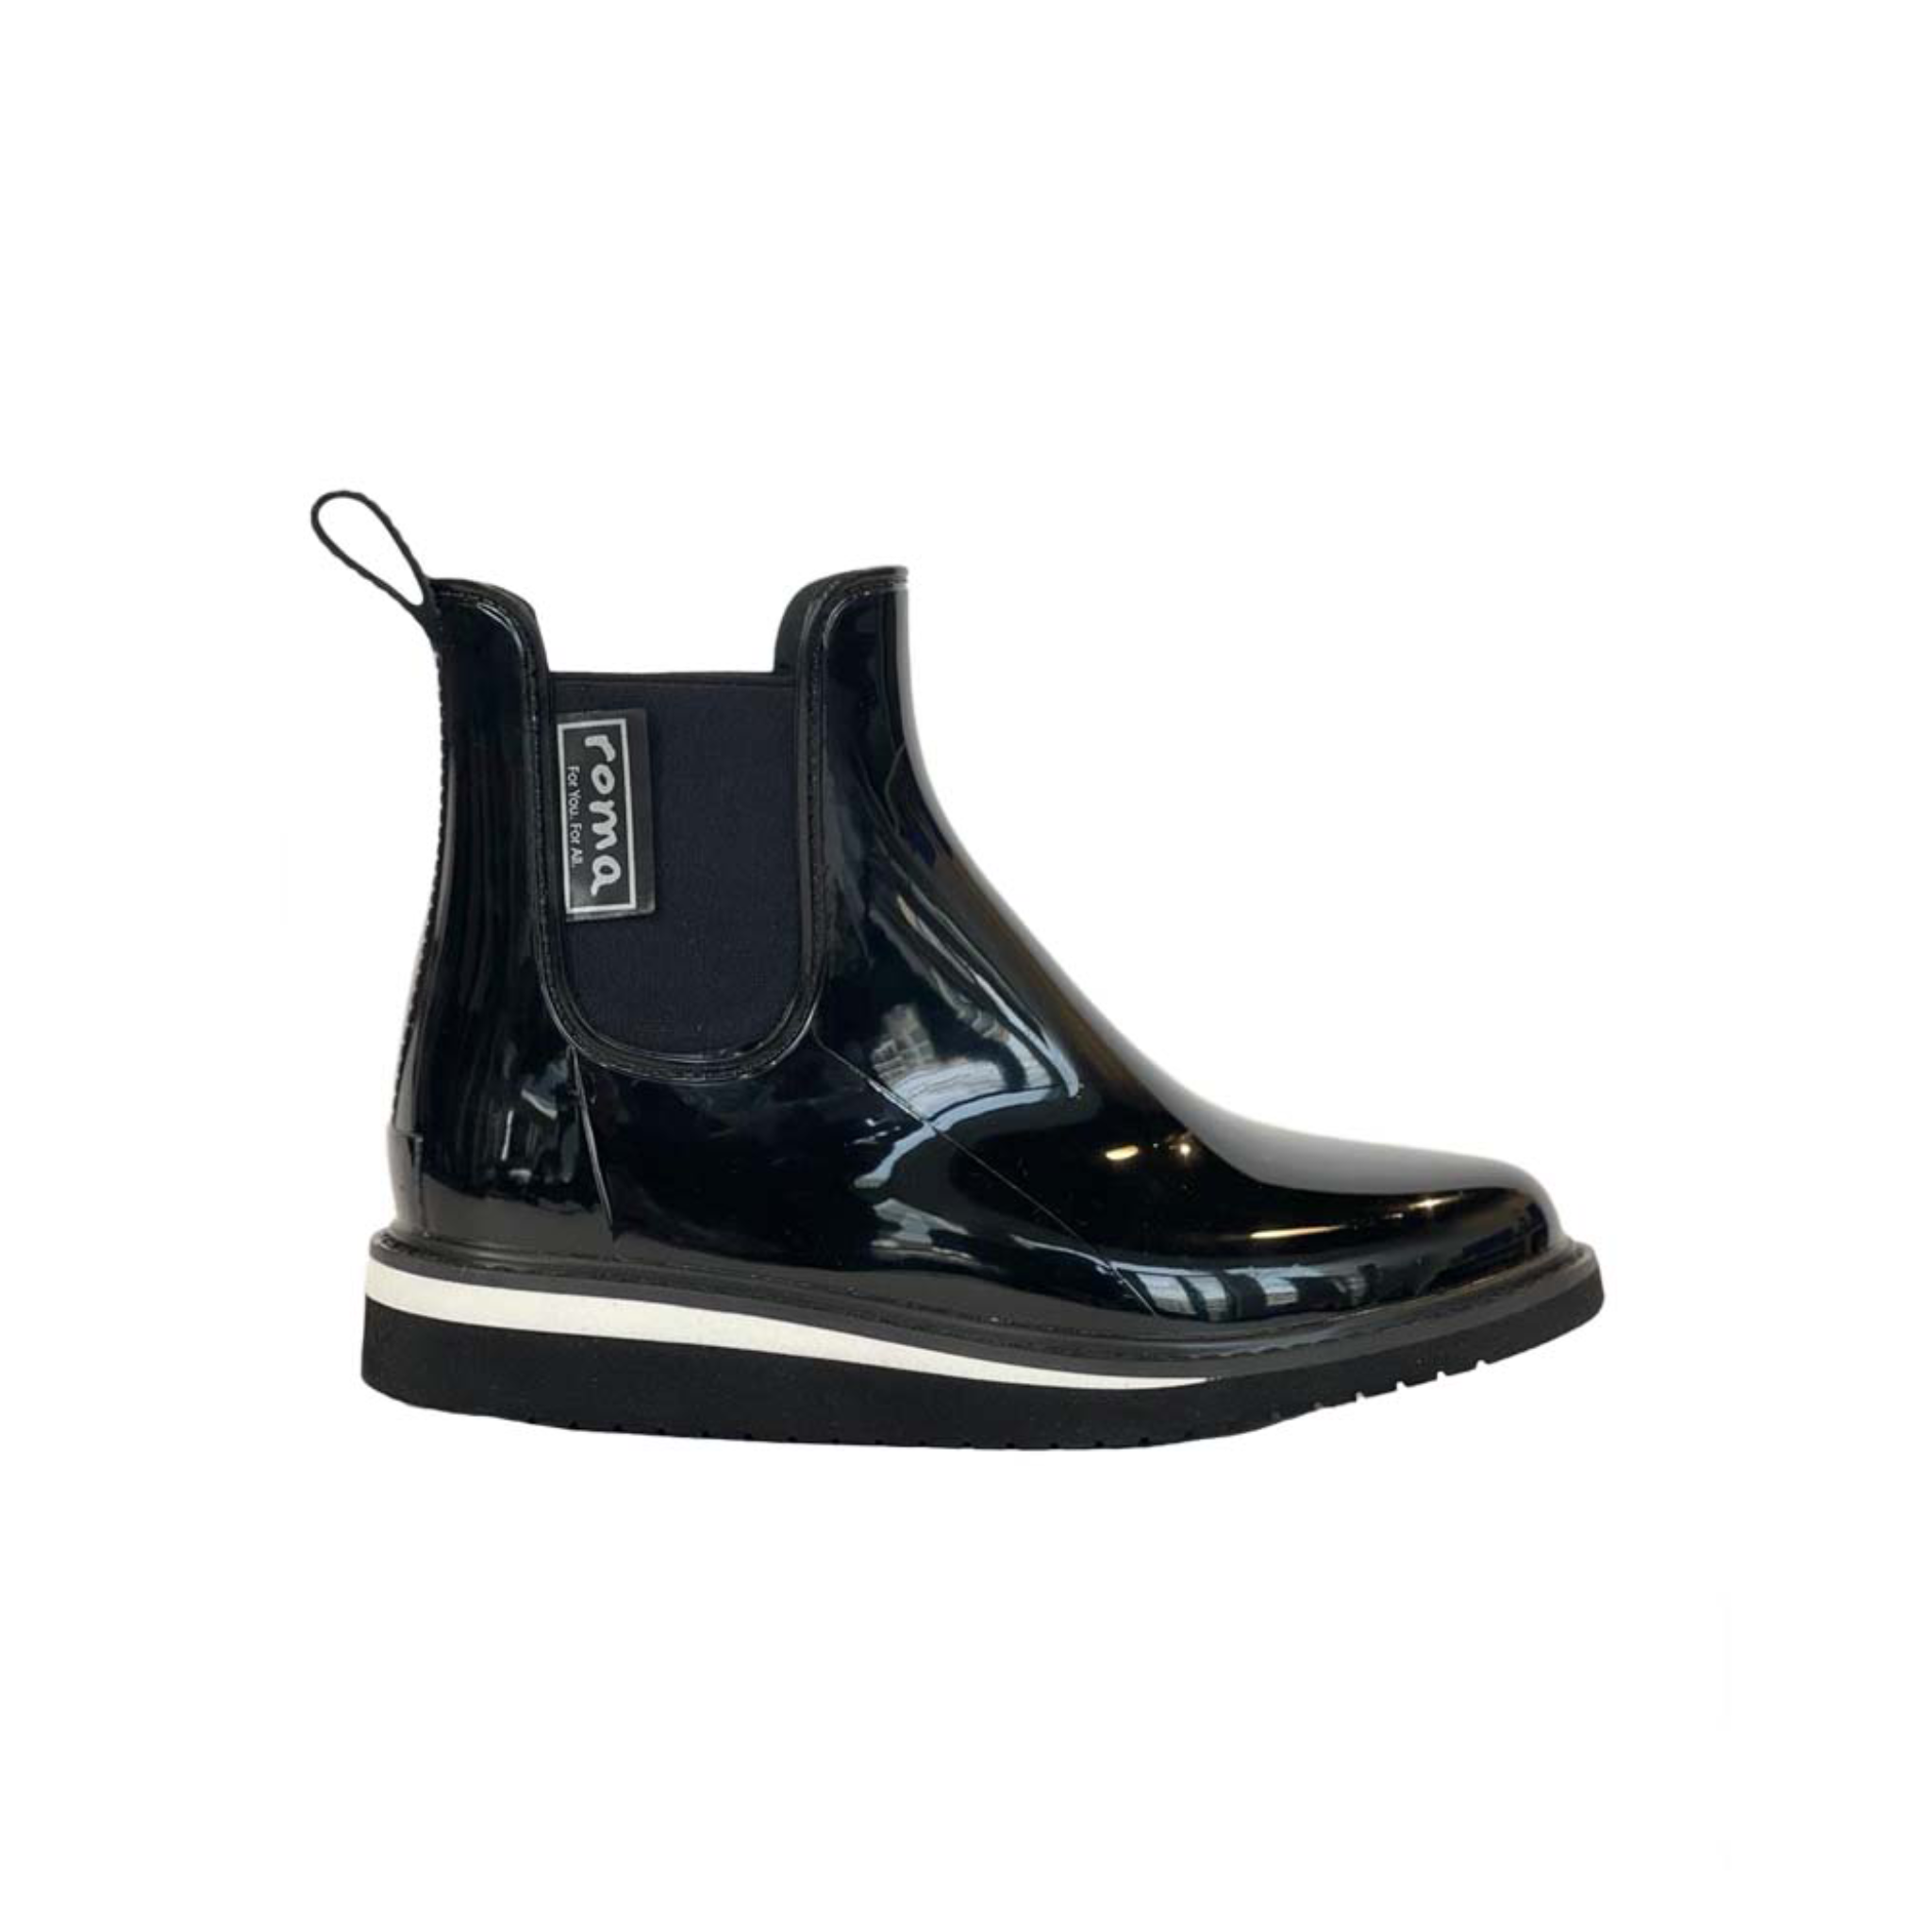 Black Rainy Platform Ankle Boots